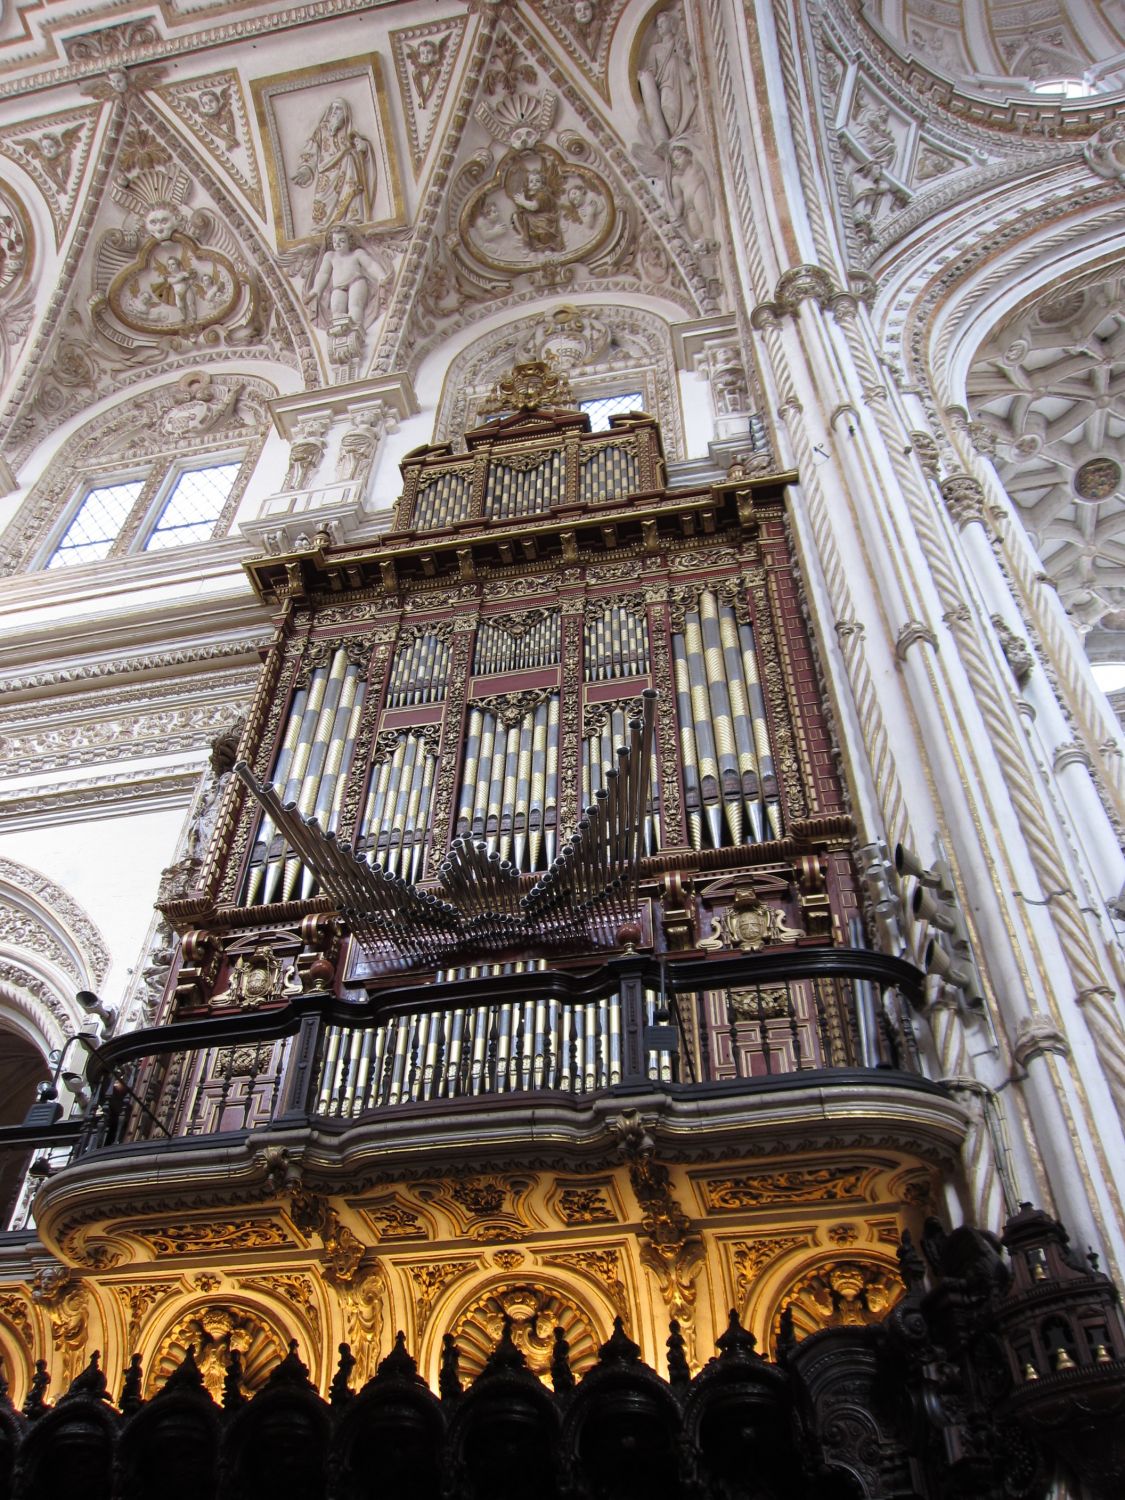 Mezquita / Kathedrale: Orgel